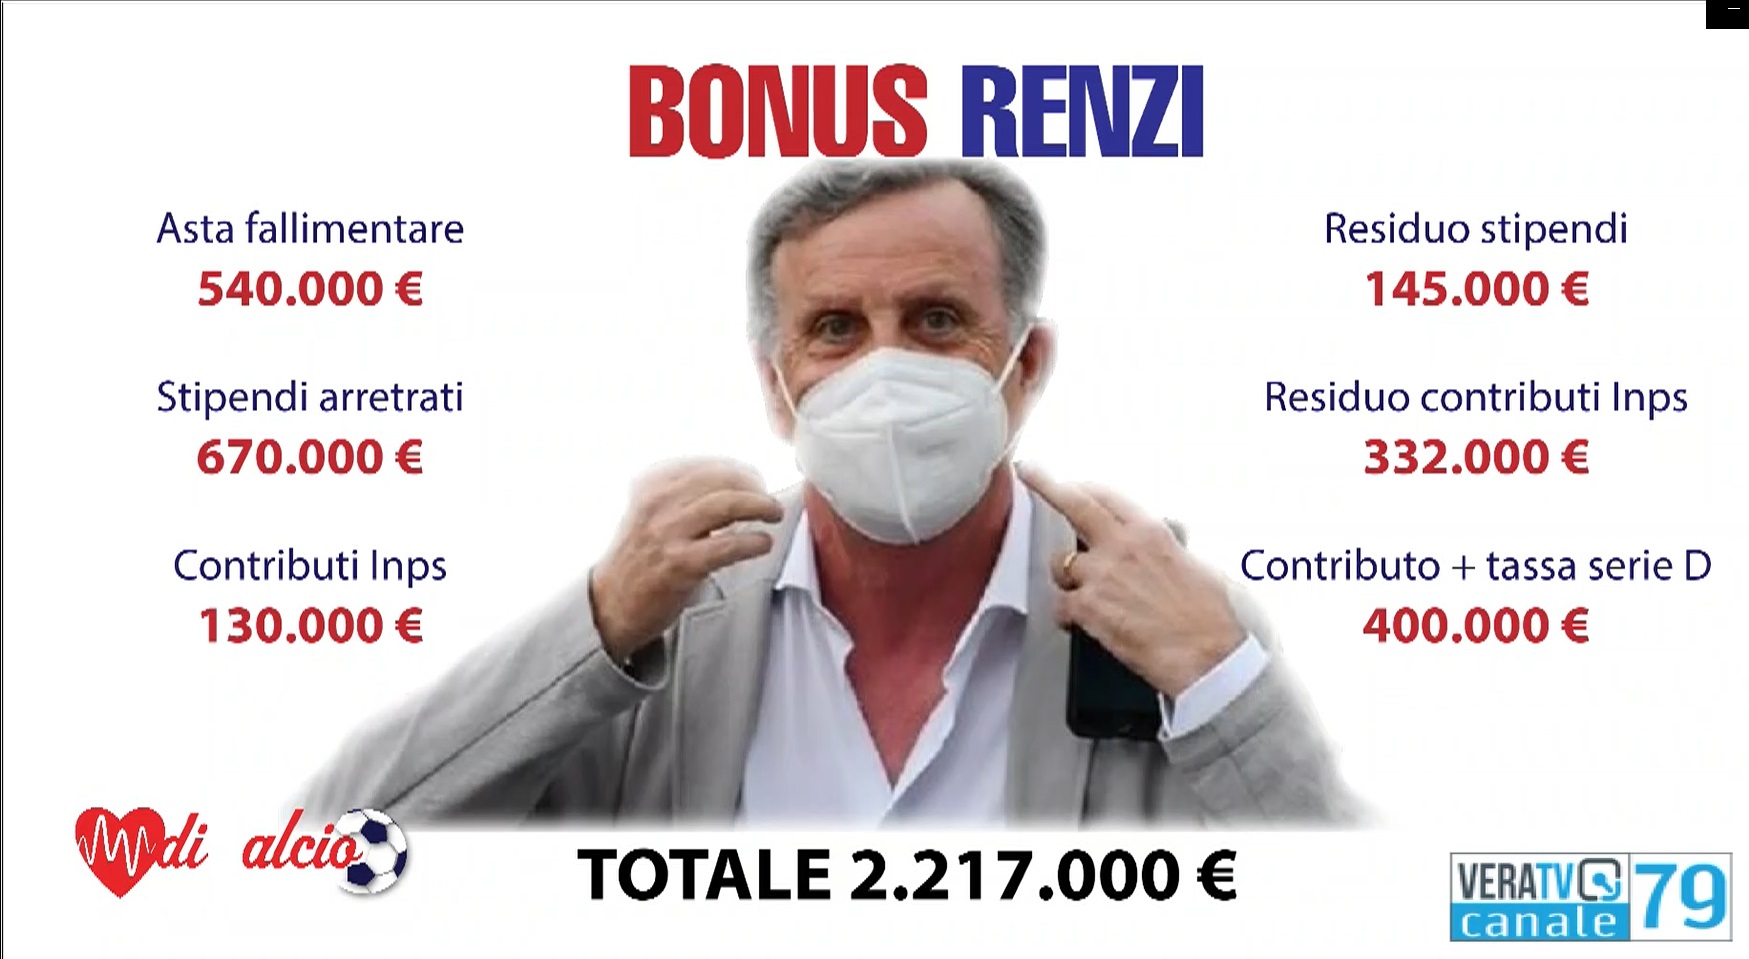 “Bonus Renzi”: spesi oltre 2,2 milioni di euro